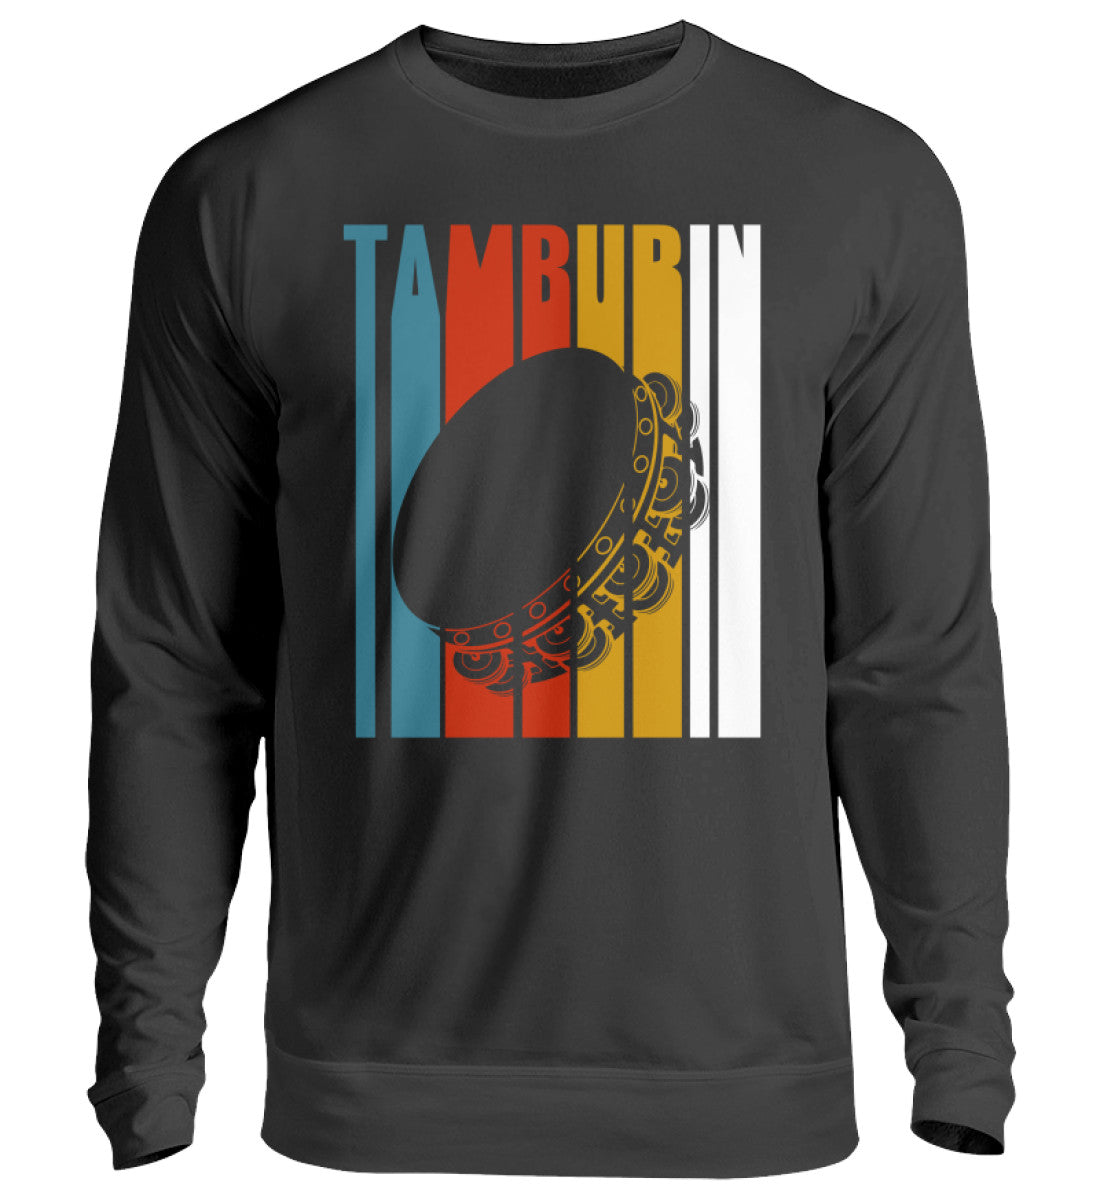 Tamburin Pullover